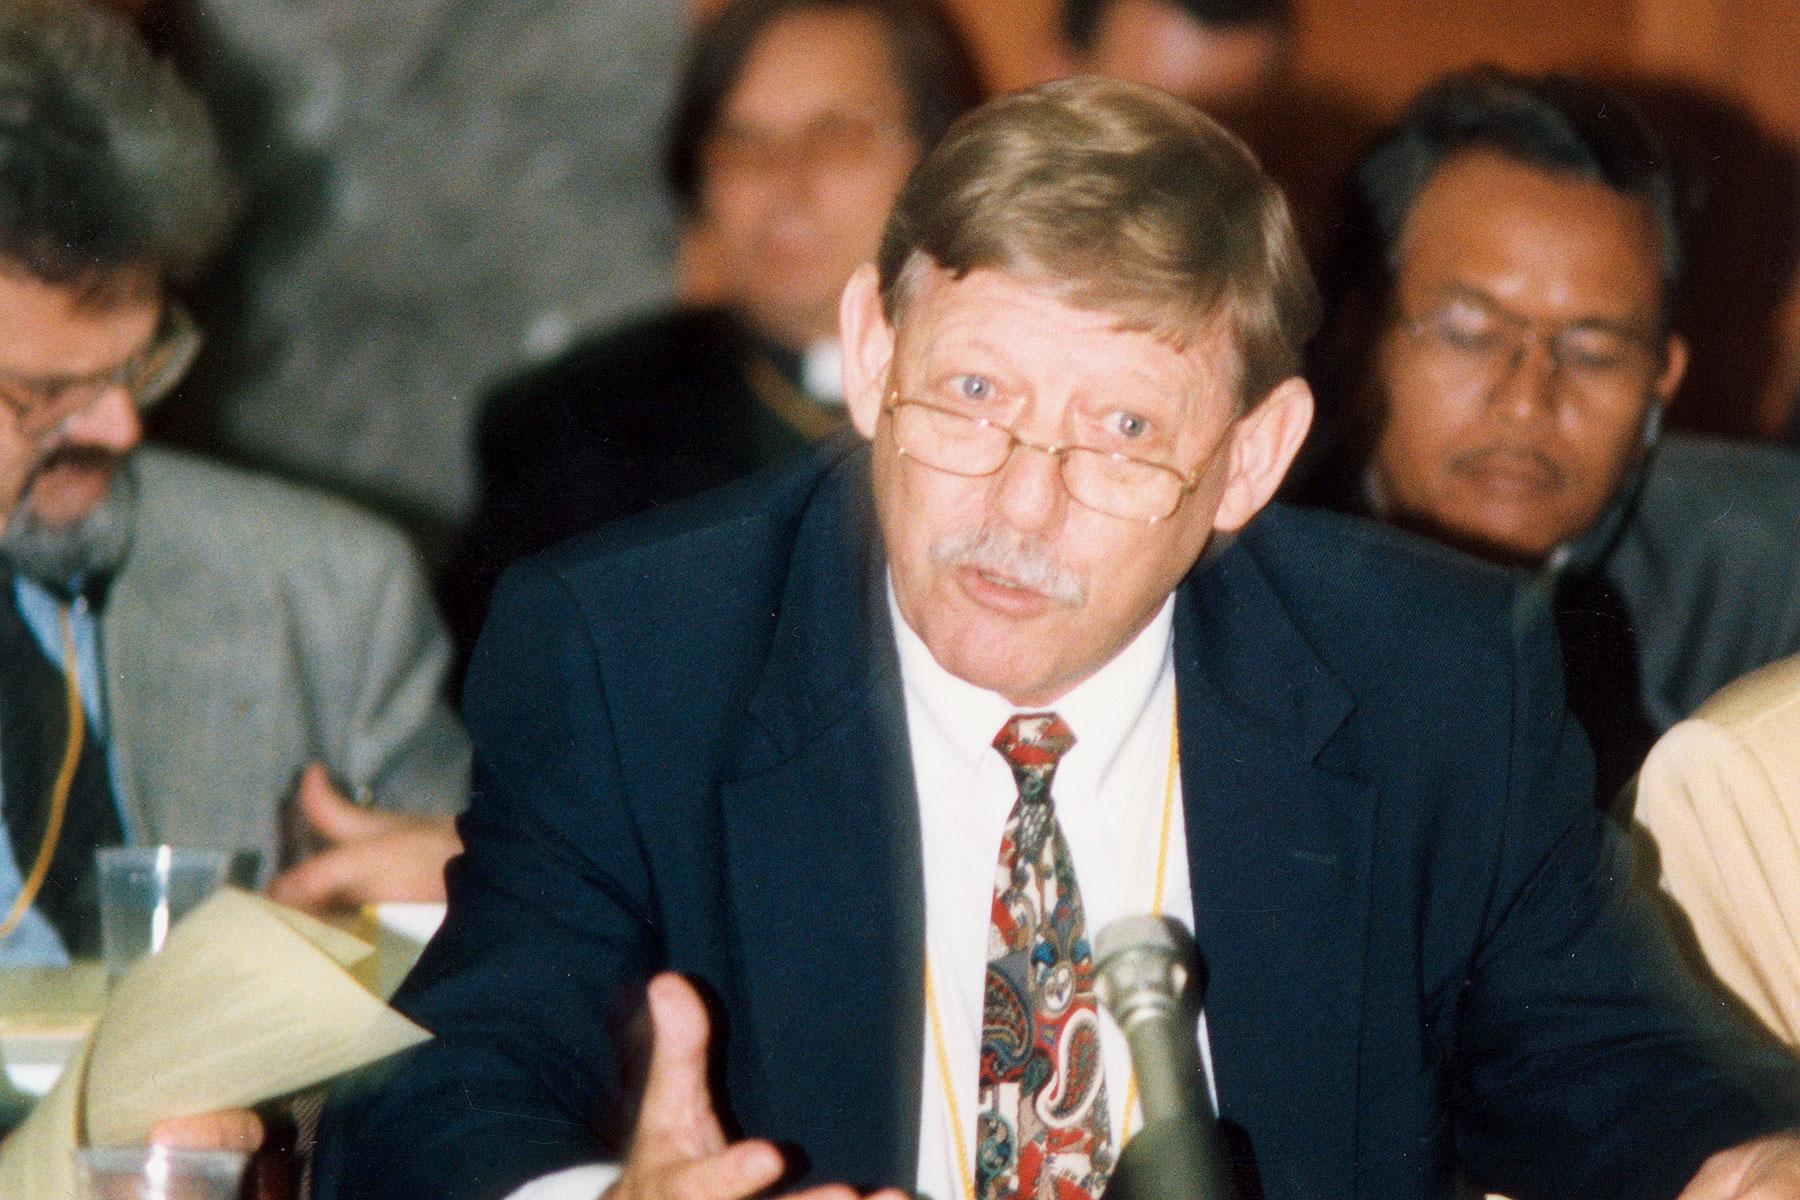 LWF Vice-President Rev. Huberto Kirchheim, during the 1998 LWF Council meeting in Geneva. Photo: LWF/C. RothenbÃ¼hler